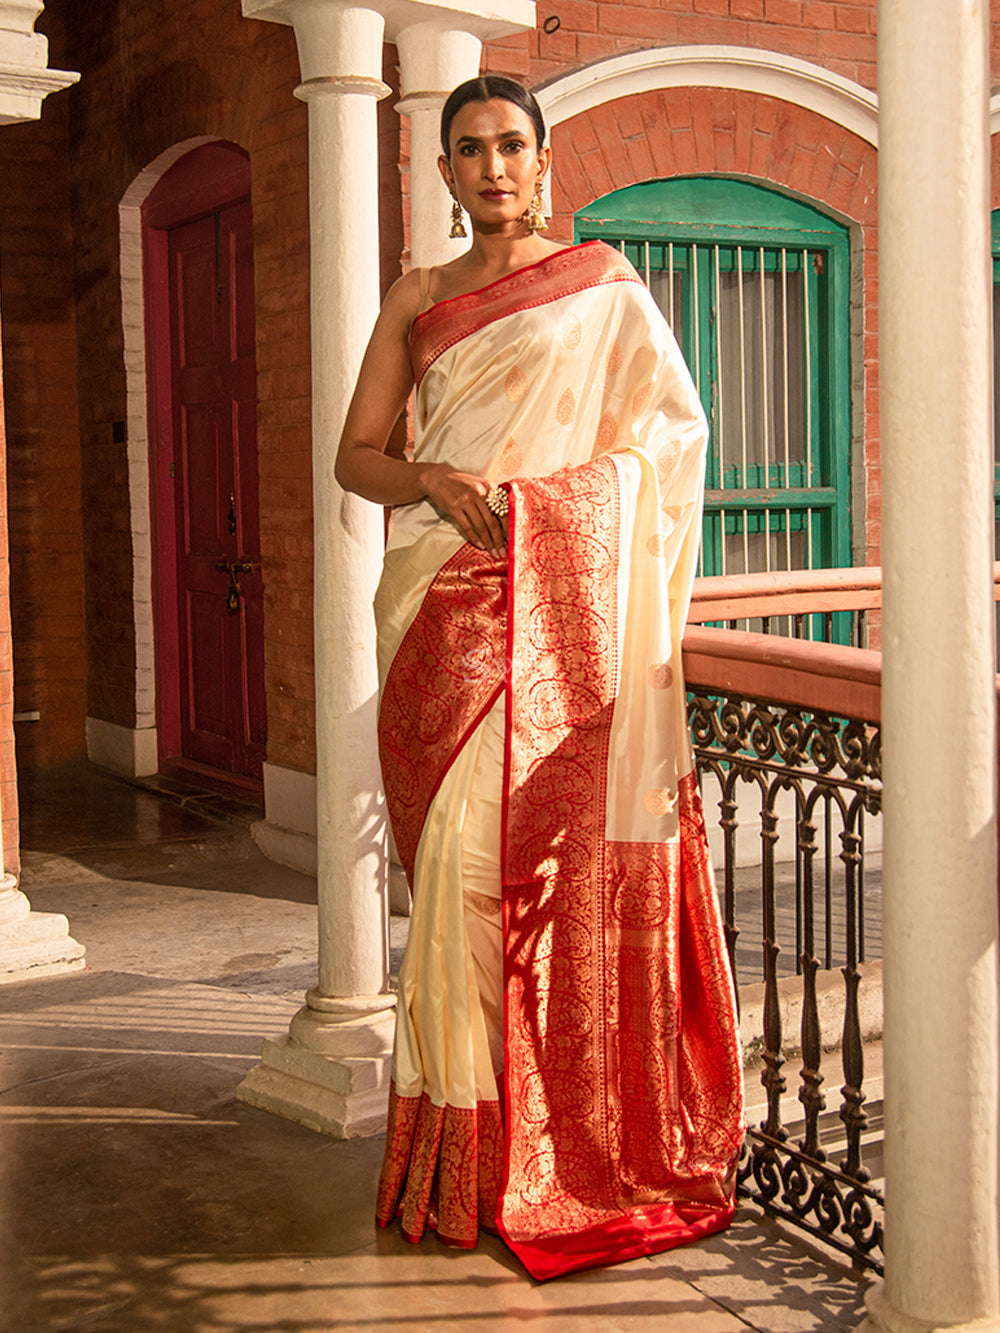 kerala hindu bridal banarasi sarees images -9298110041 | Heenastyle